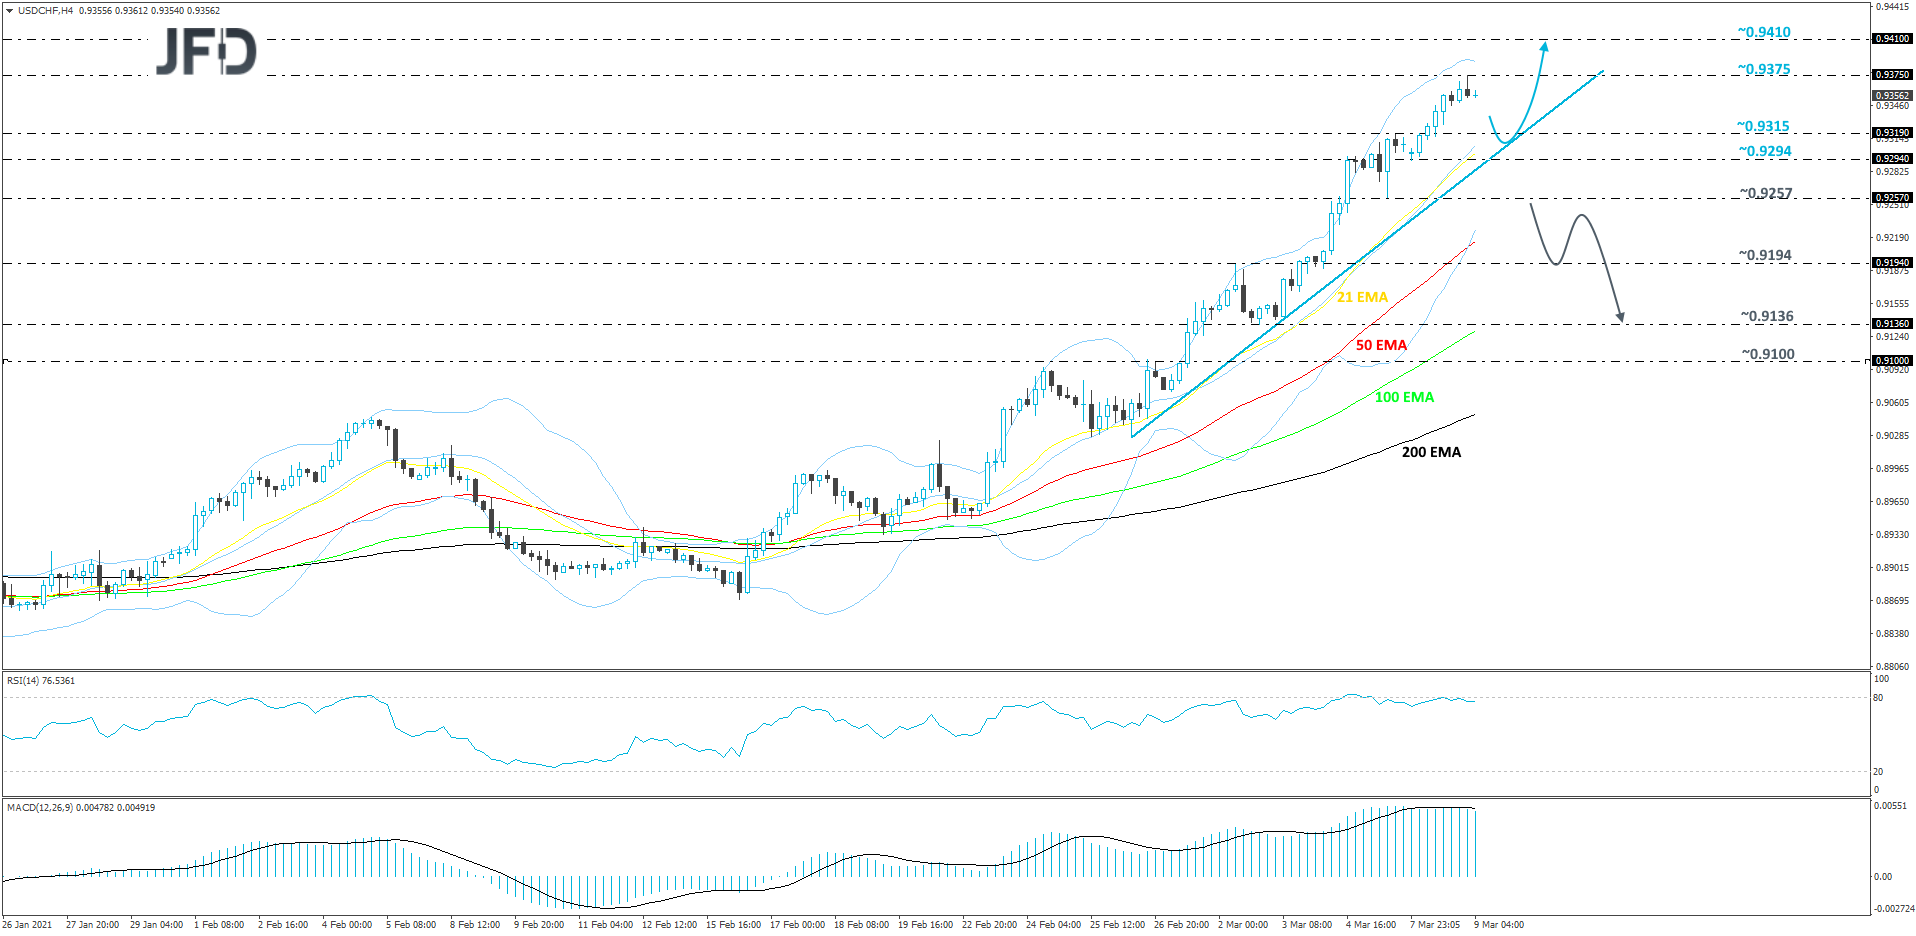 USD/CHF 4-hour chart technical analysis